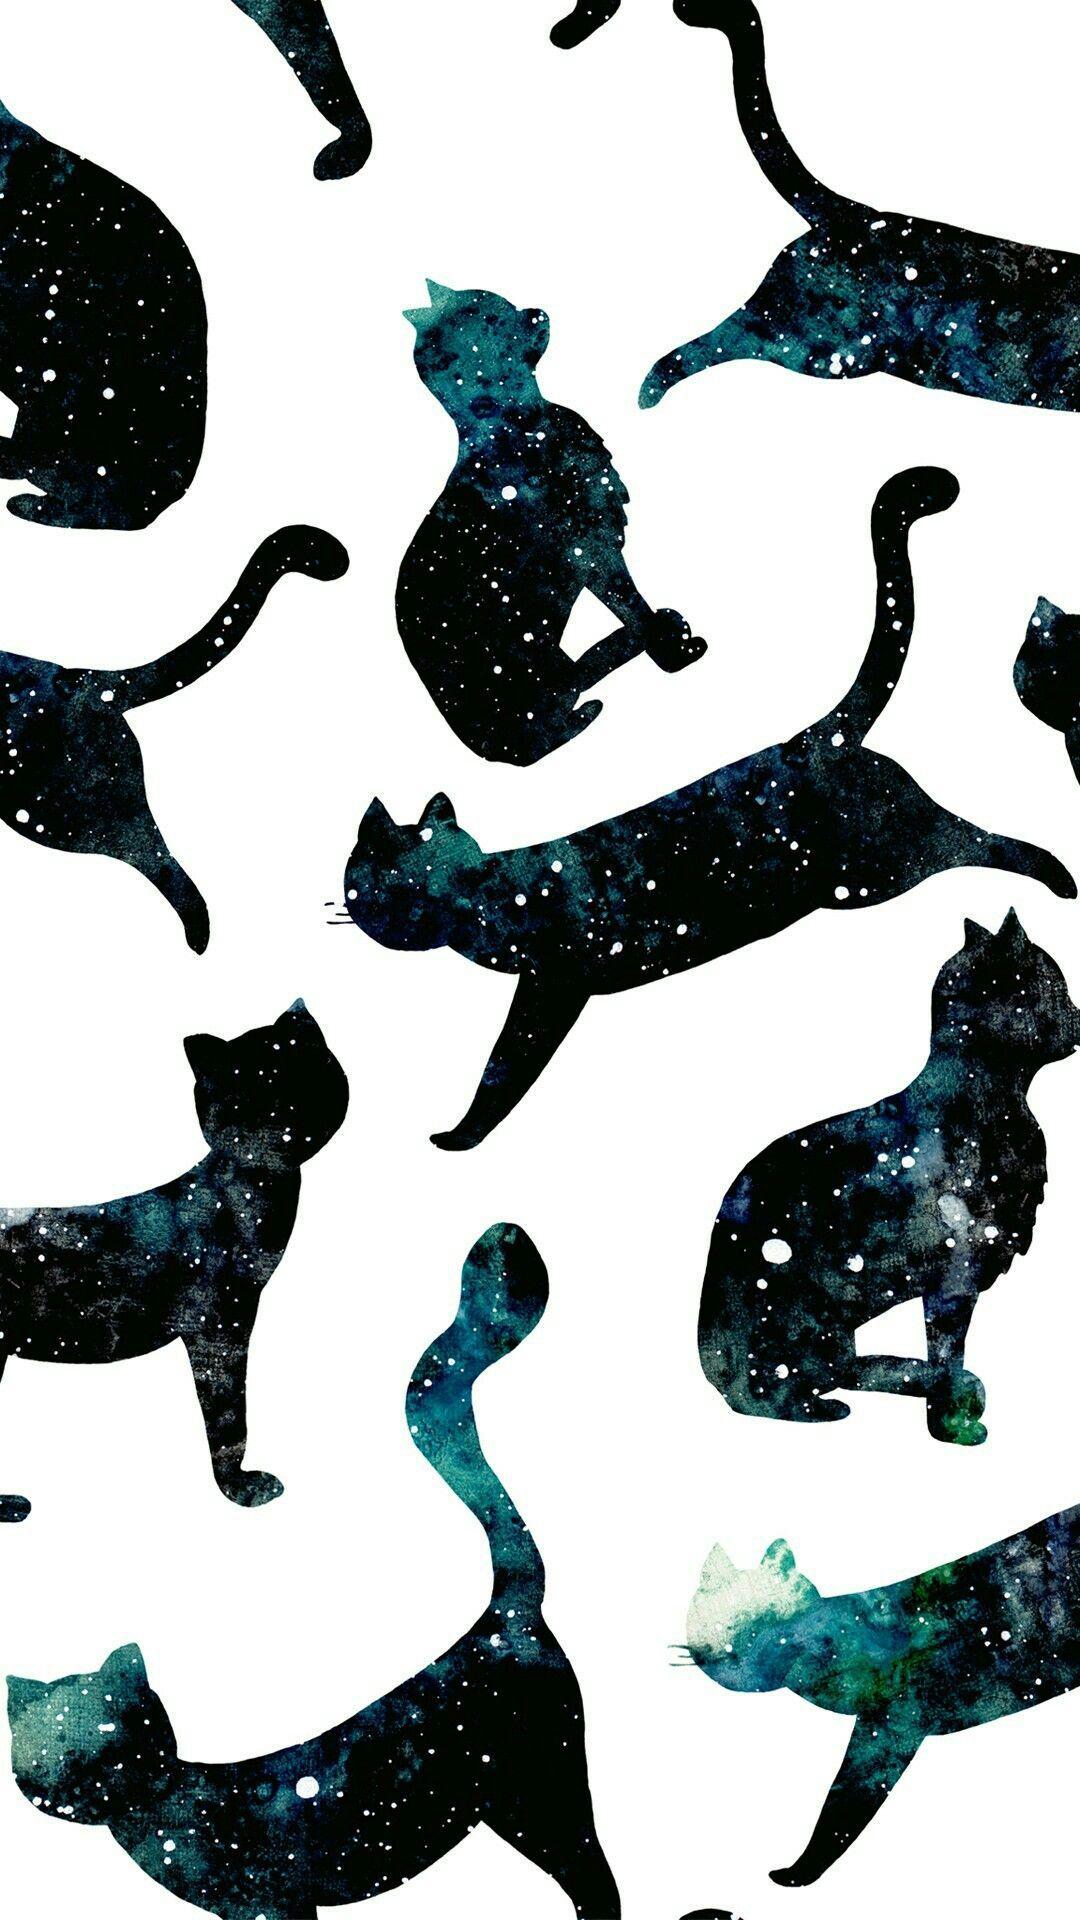 Wallpaper, cat, Galaxy. Cat pattern wallpaper, iPhone wallpaper